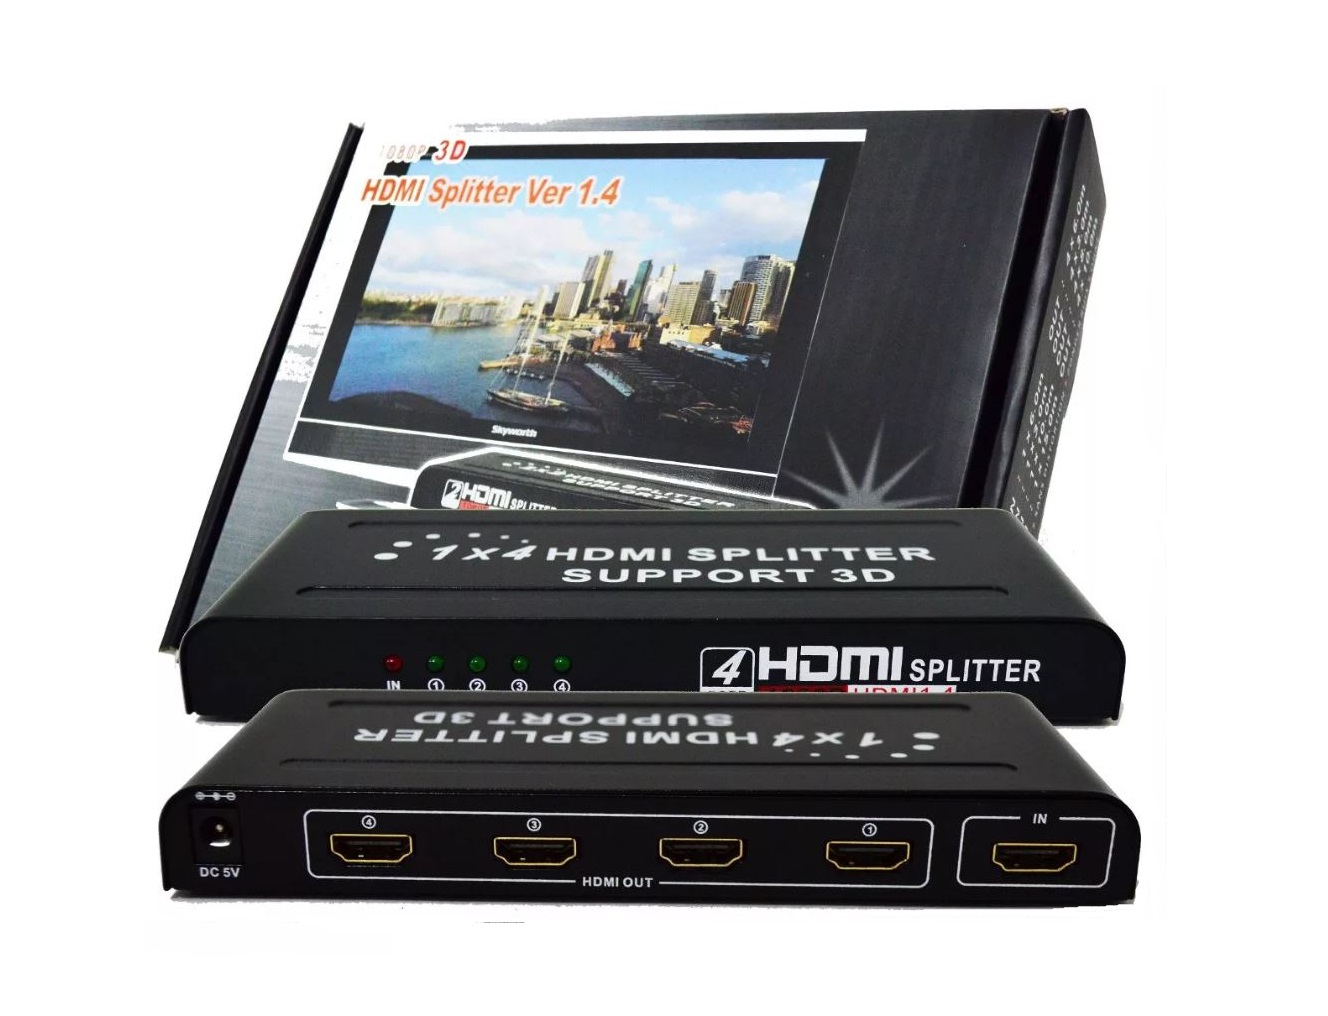 Distribuidor HDMI 1 x 4 DK-104